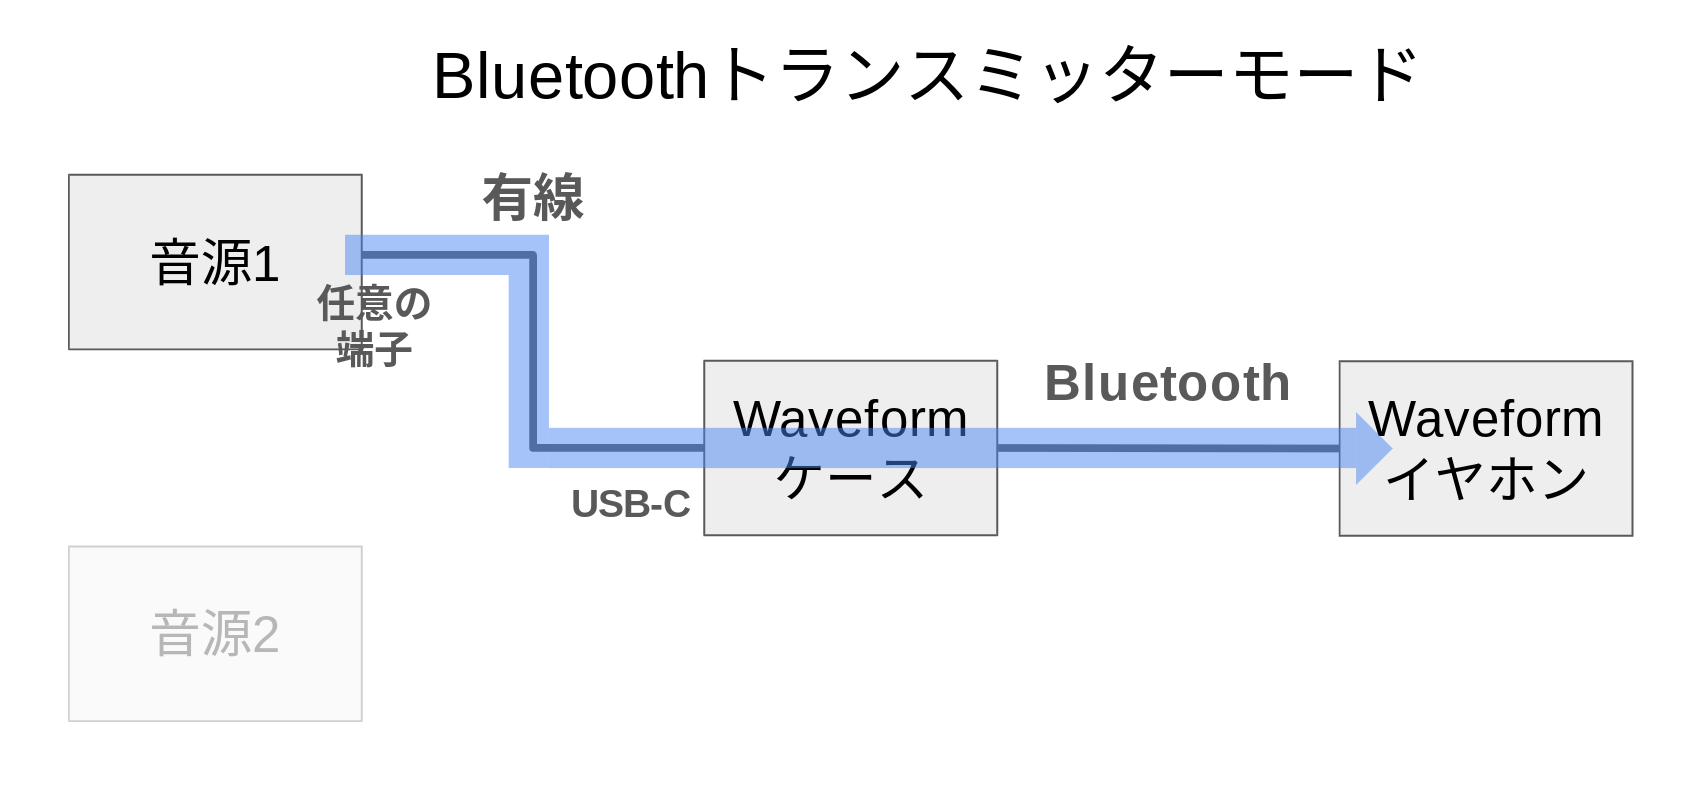 GENKI Waveformレビュー 接続系統図 Bluetoothトランスミッターモード